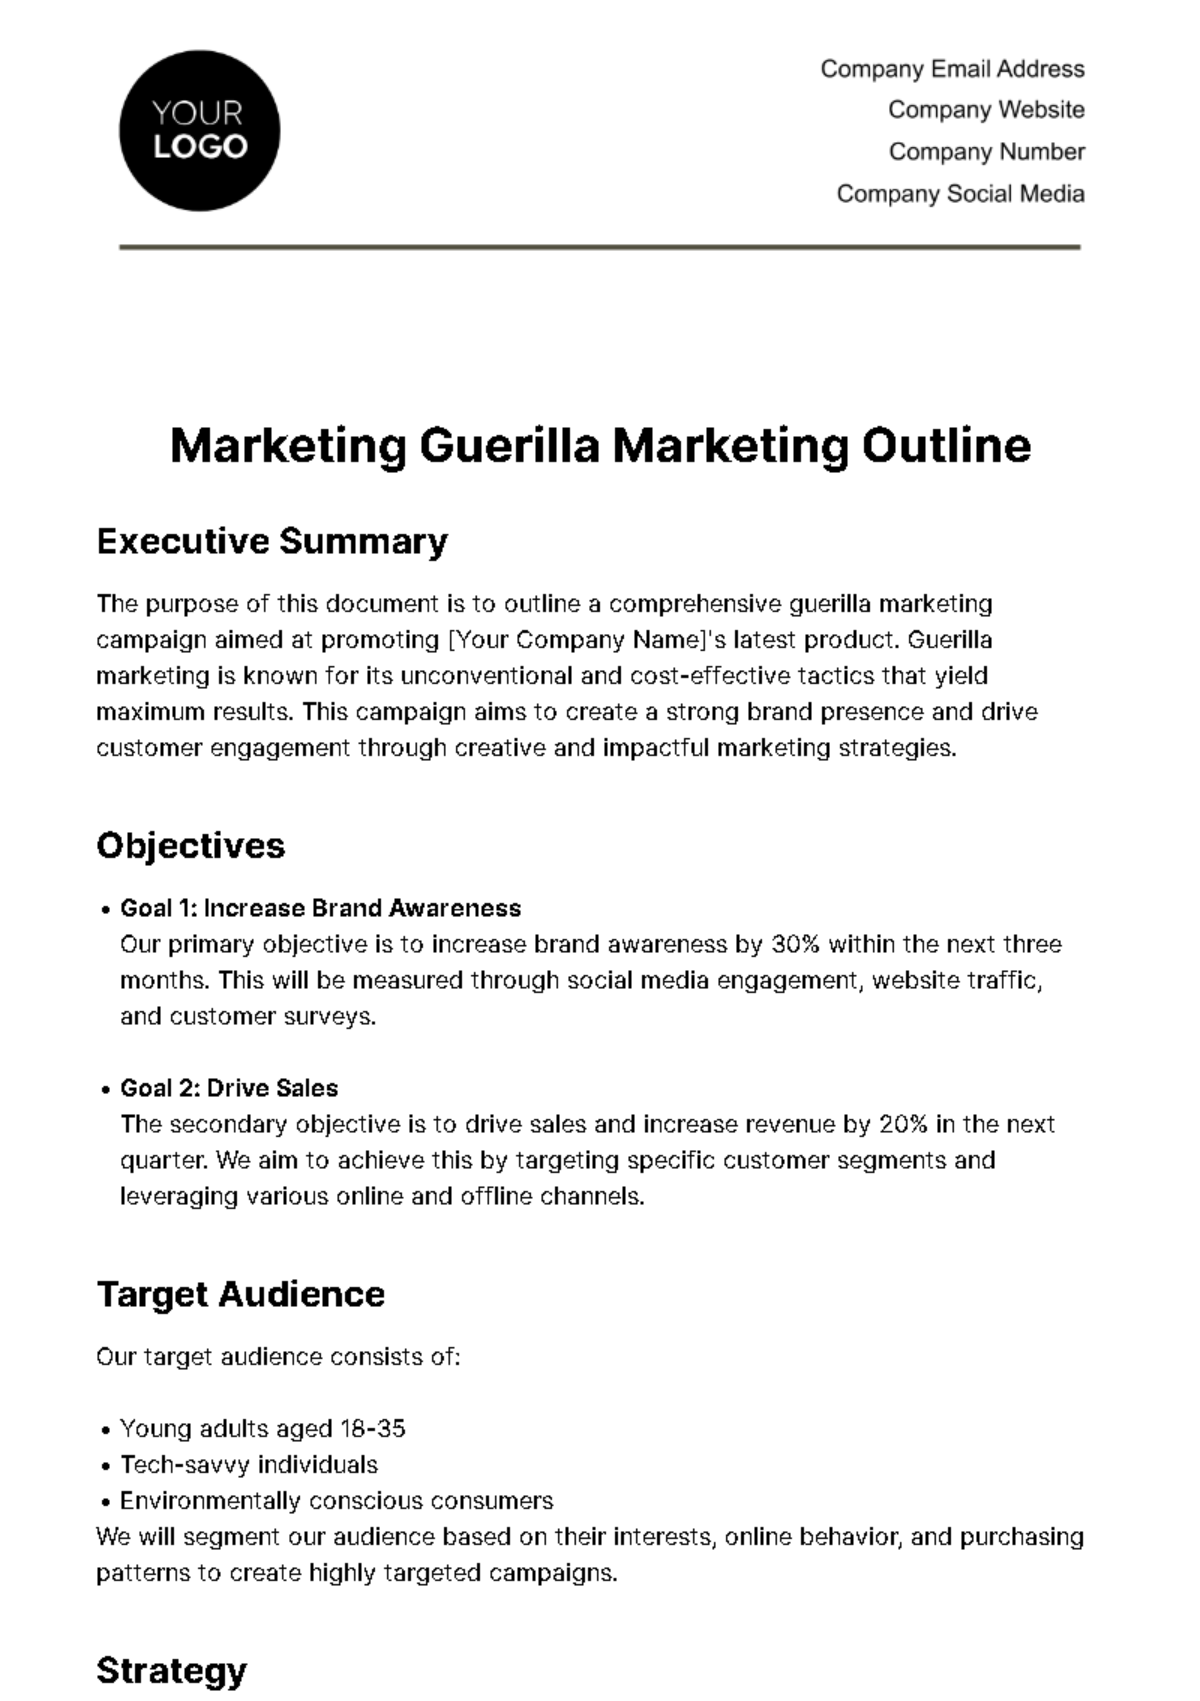 Free Marketing Guerilla Marketing Outline Template